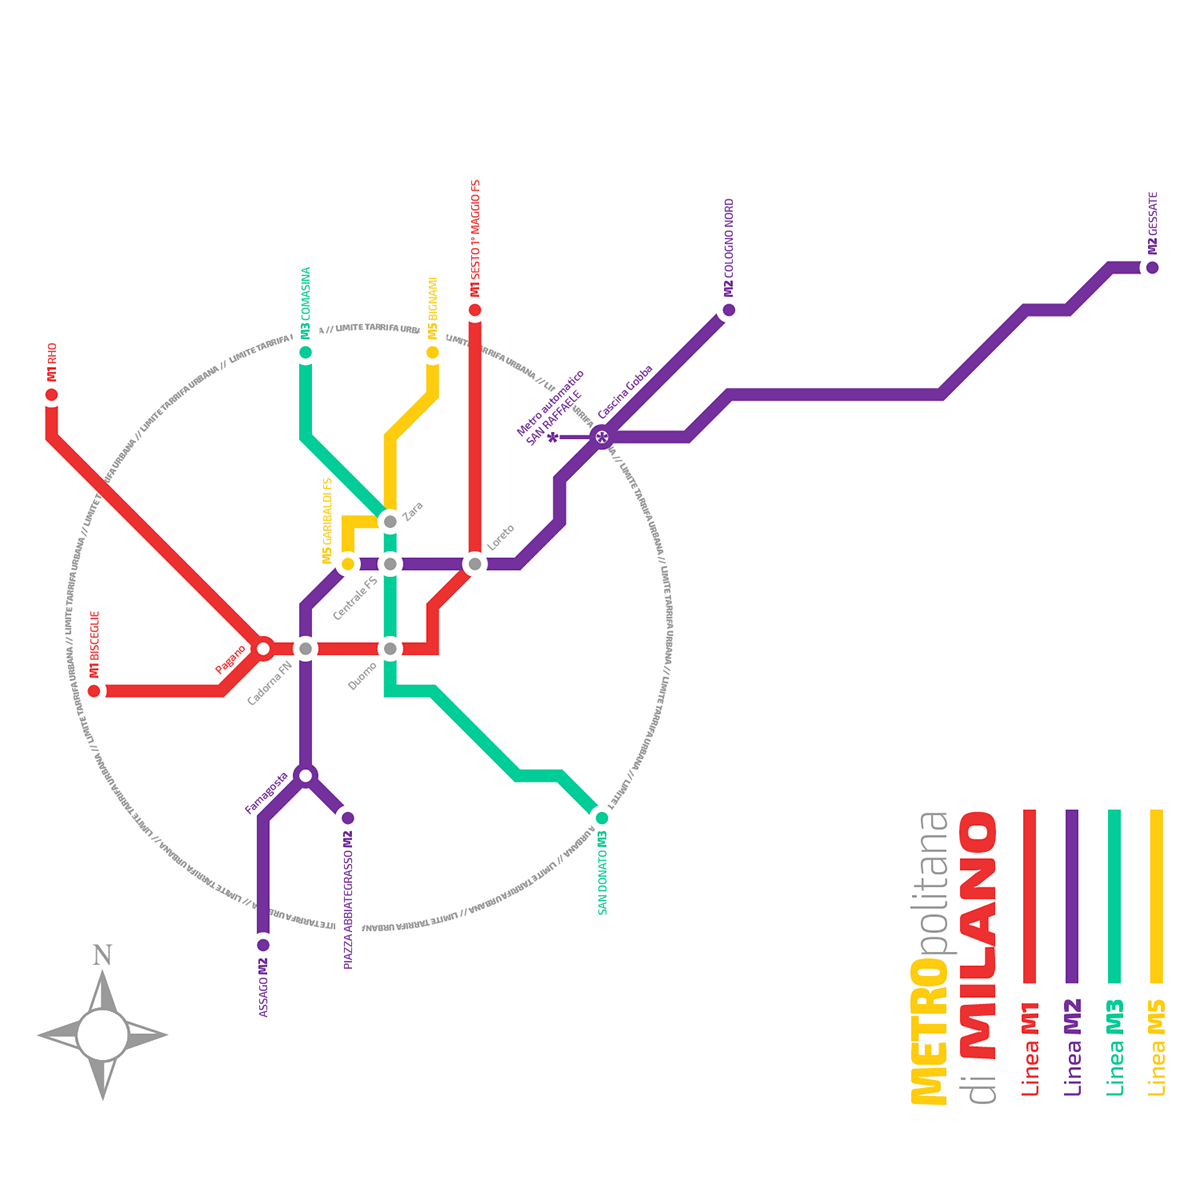 mailand milano milan subway metro metropolitana map u-bahn karte schema Metro Milano